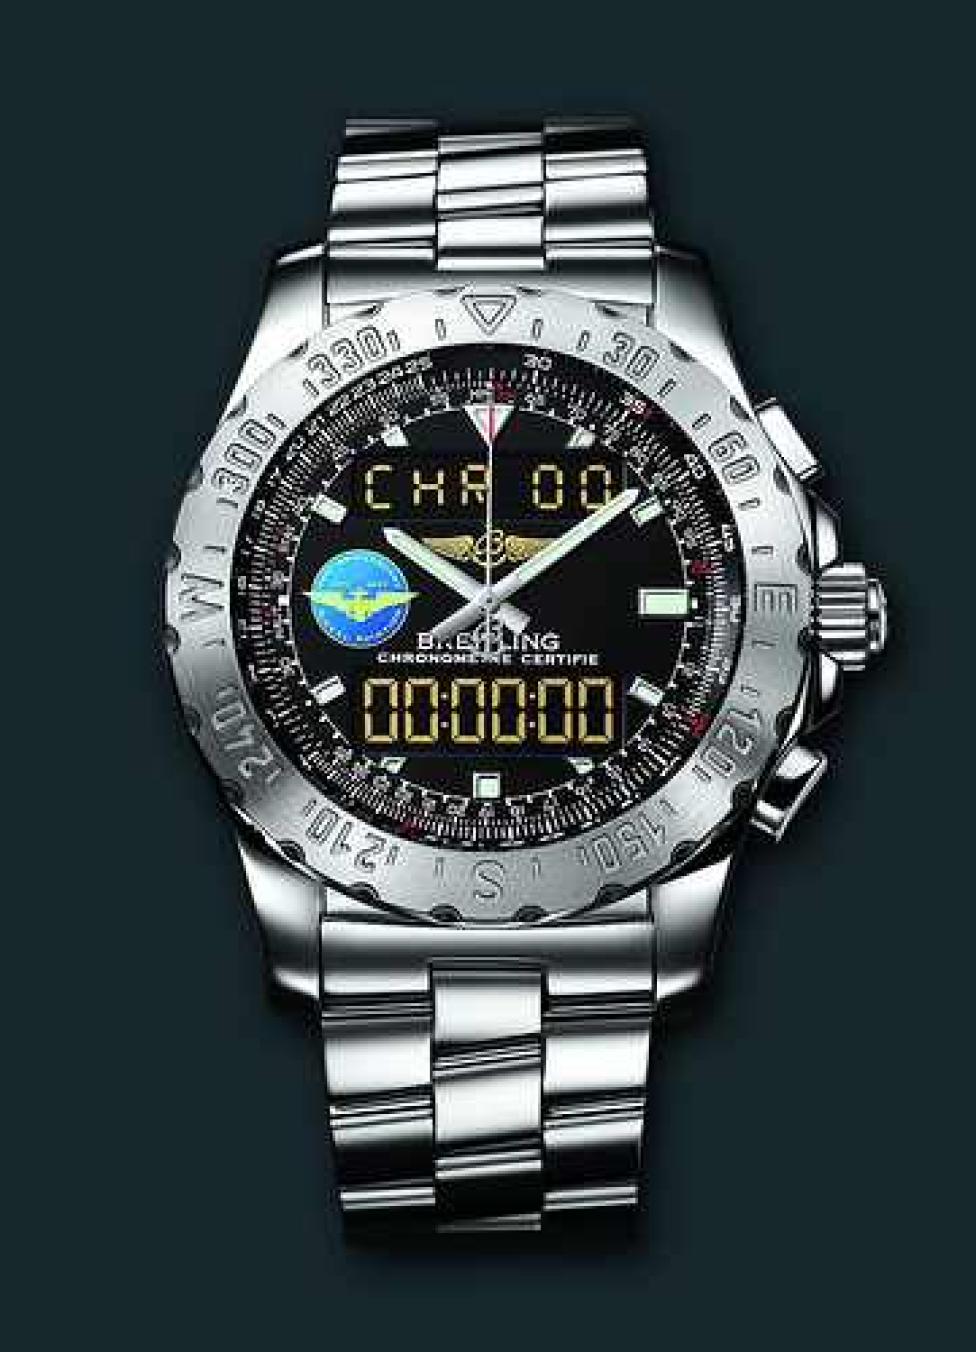 Zegarek firmy Breitling